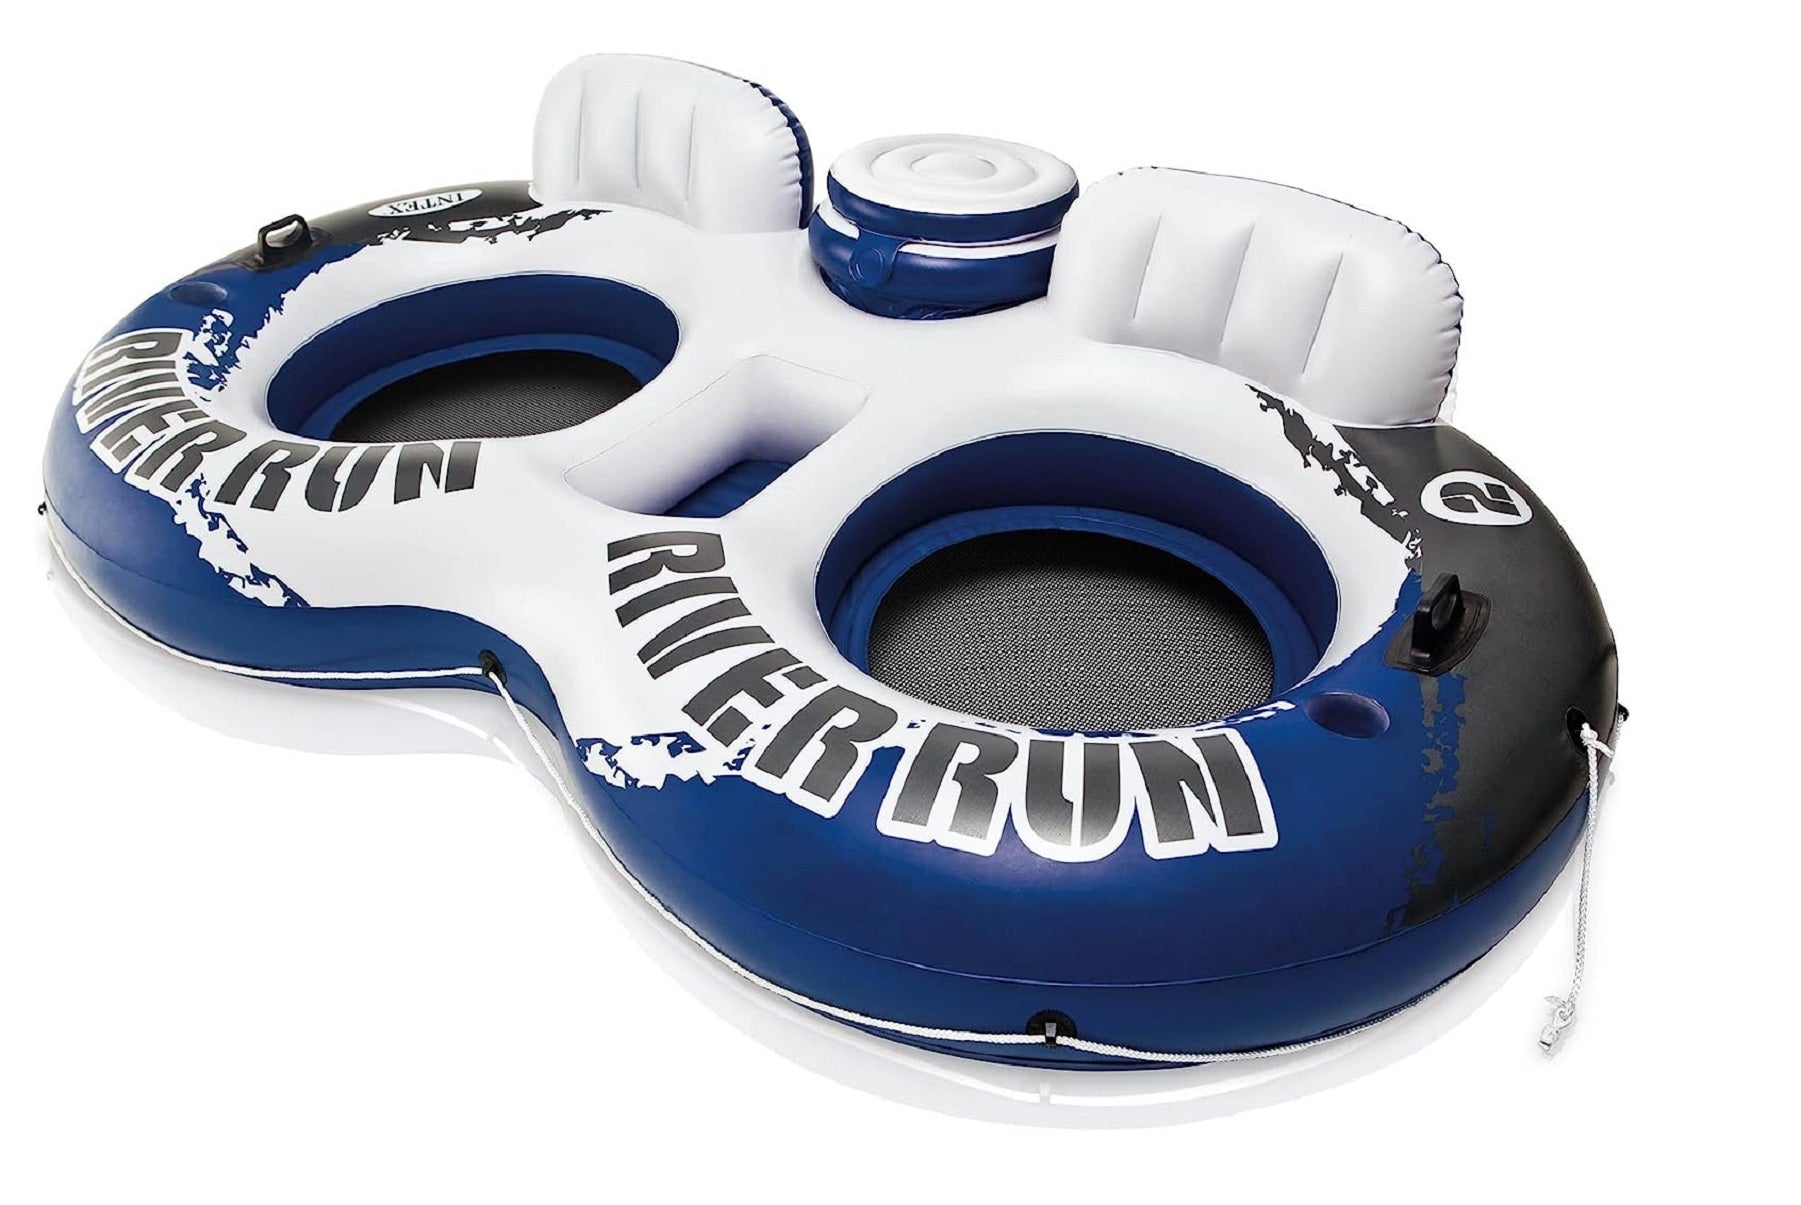 Intex River Run II Sport Lounge Inflatable Water Float 95.5in X 62in